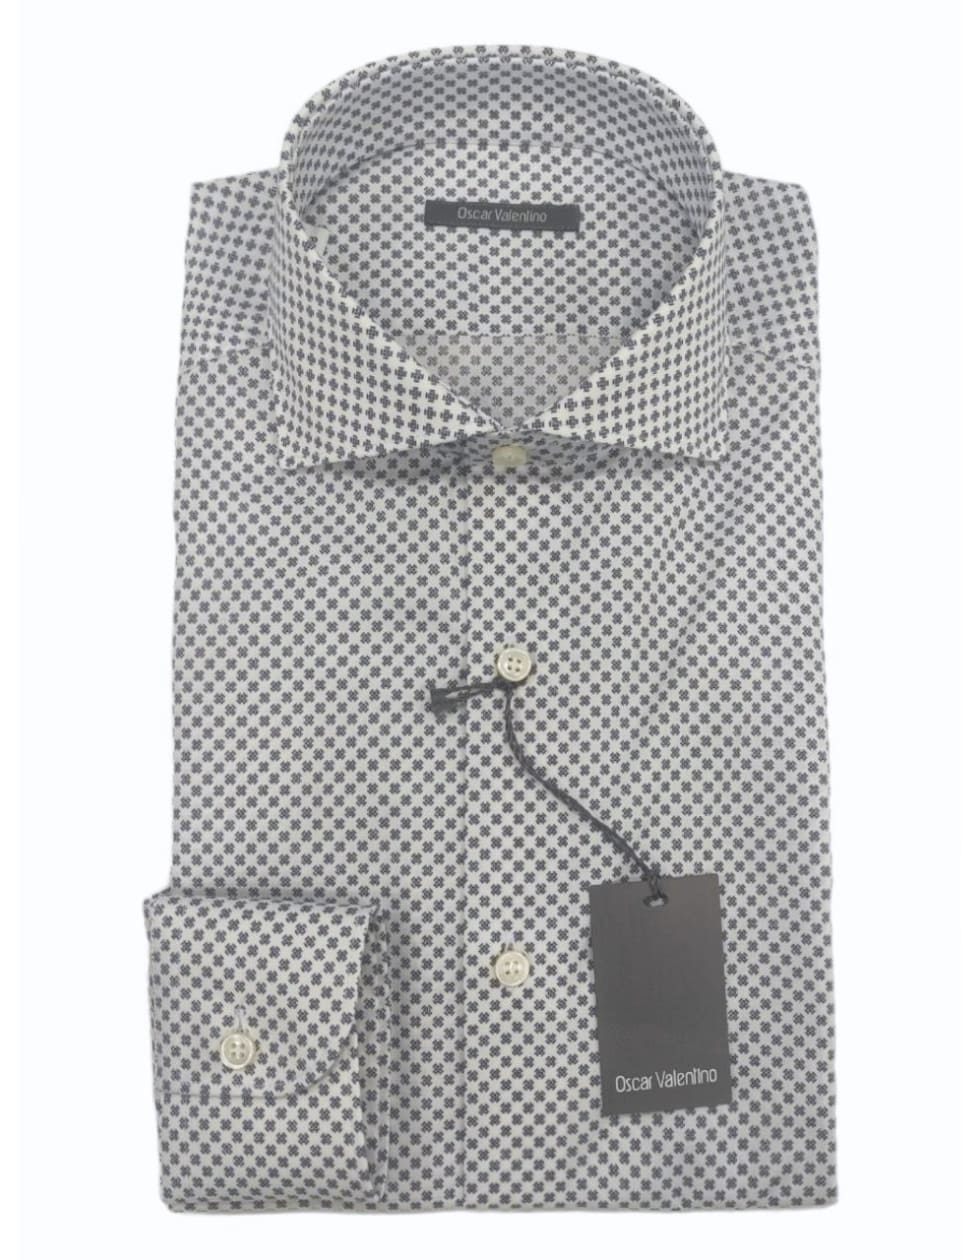 Camicia manica lunga cotone - microfantasia/fondo bianco - OSCAR VALENTINO